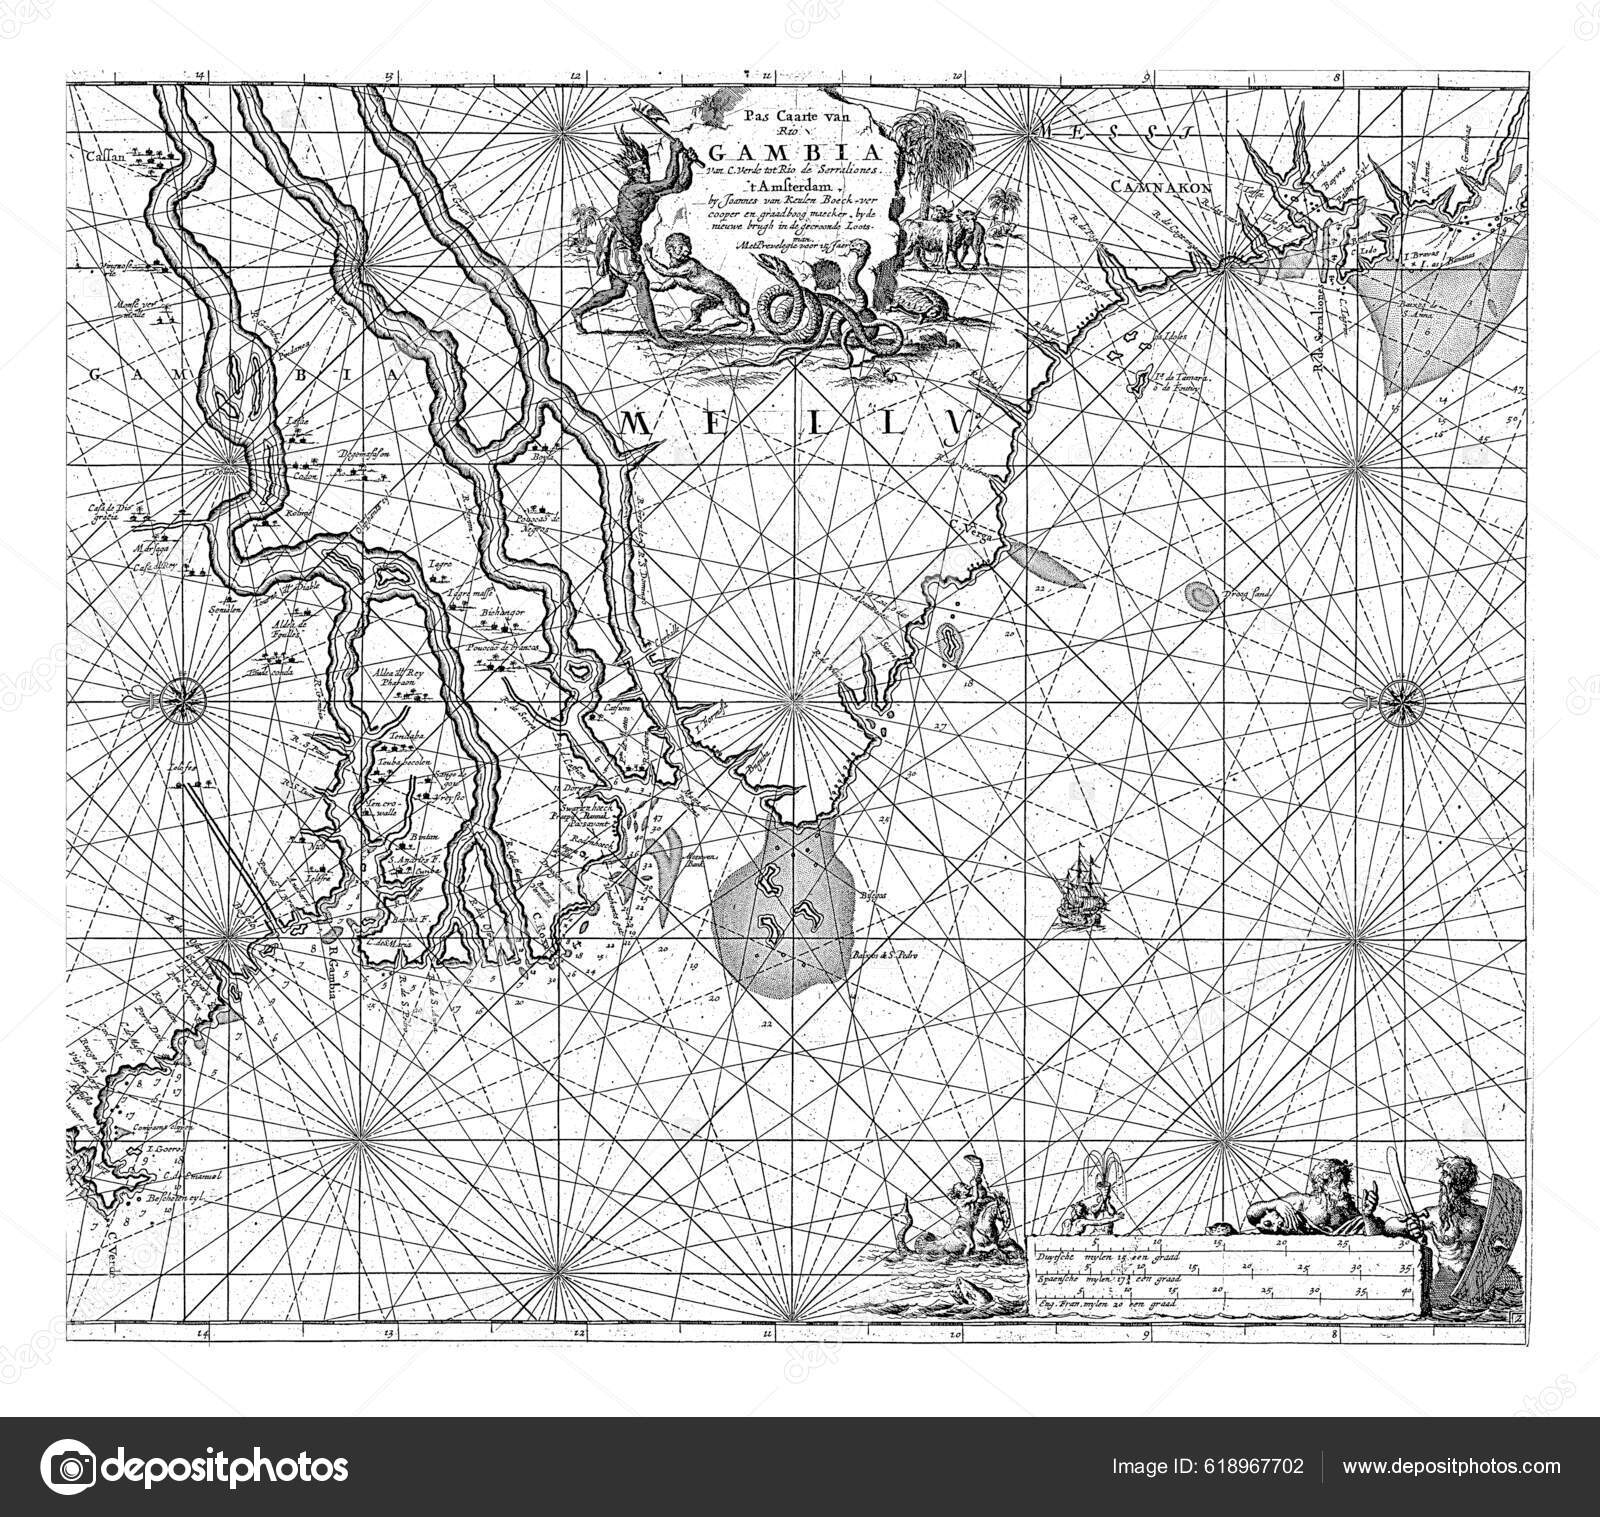 https://st5.depositphotos.com/1041725/61896/i/1600/depositphotos_618967702-stock-illustration-nautical-chart-coast-gambia-part.jpg